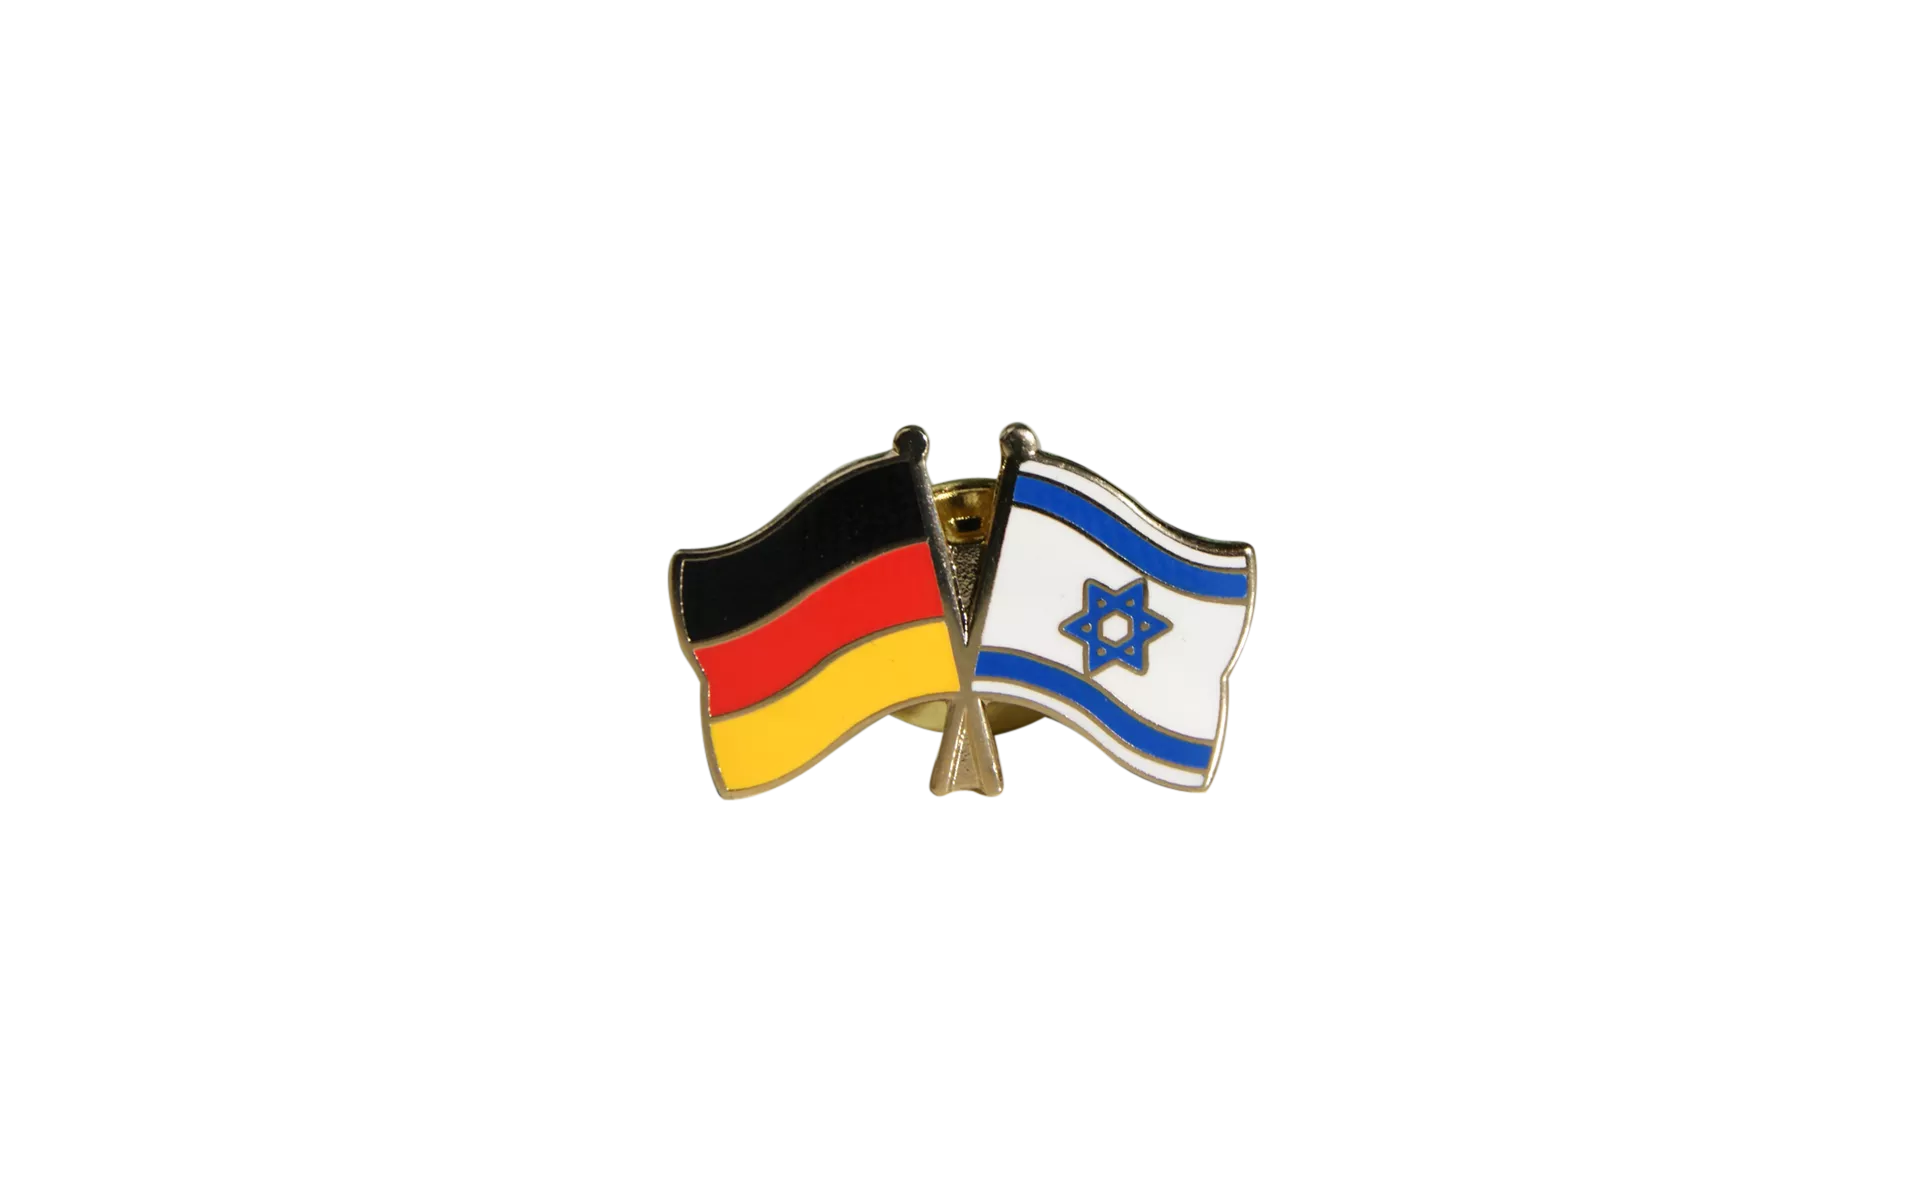 Freundschaftspin Deutschland Israel Pin Button Badge Anstecker Anstecknadel AS 